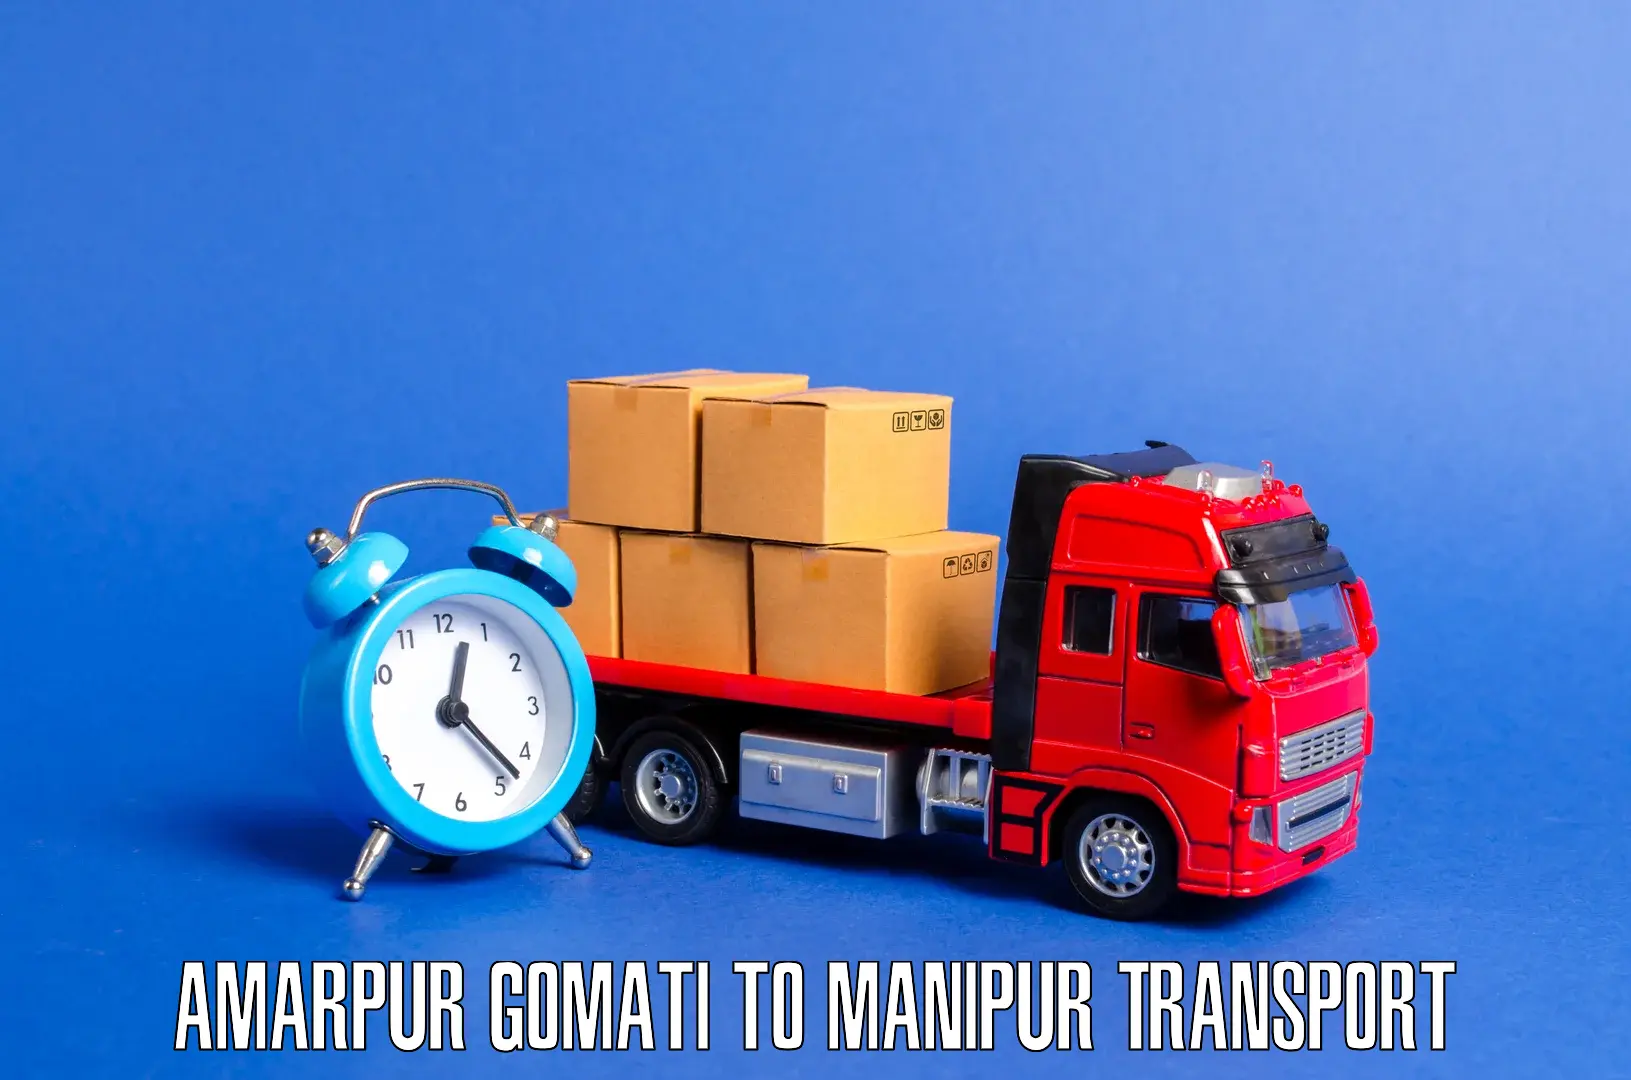 Pick up transport service Amarpur Gomati to Jiribam